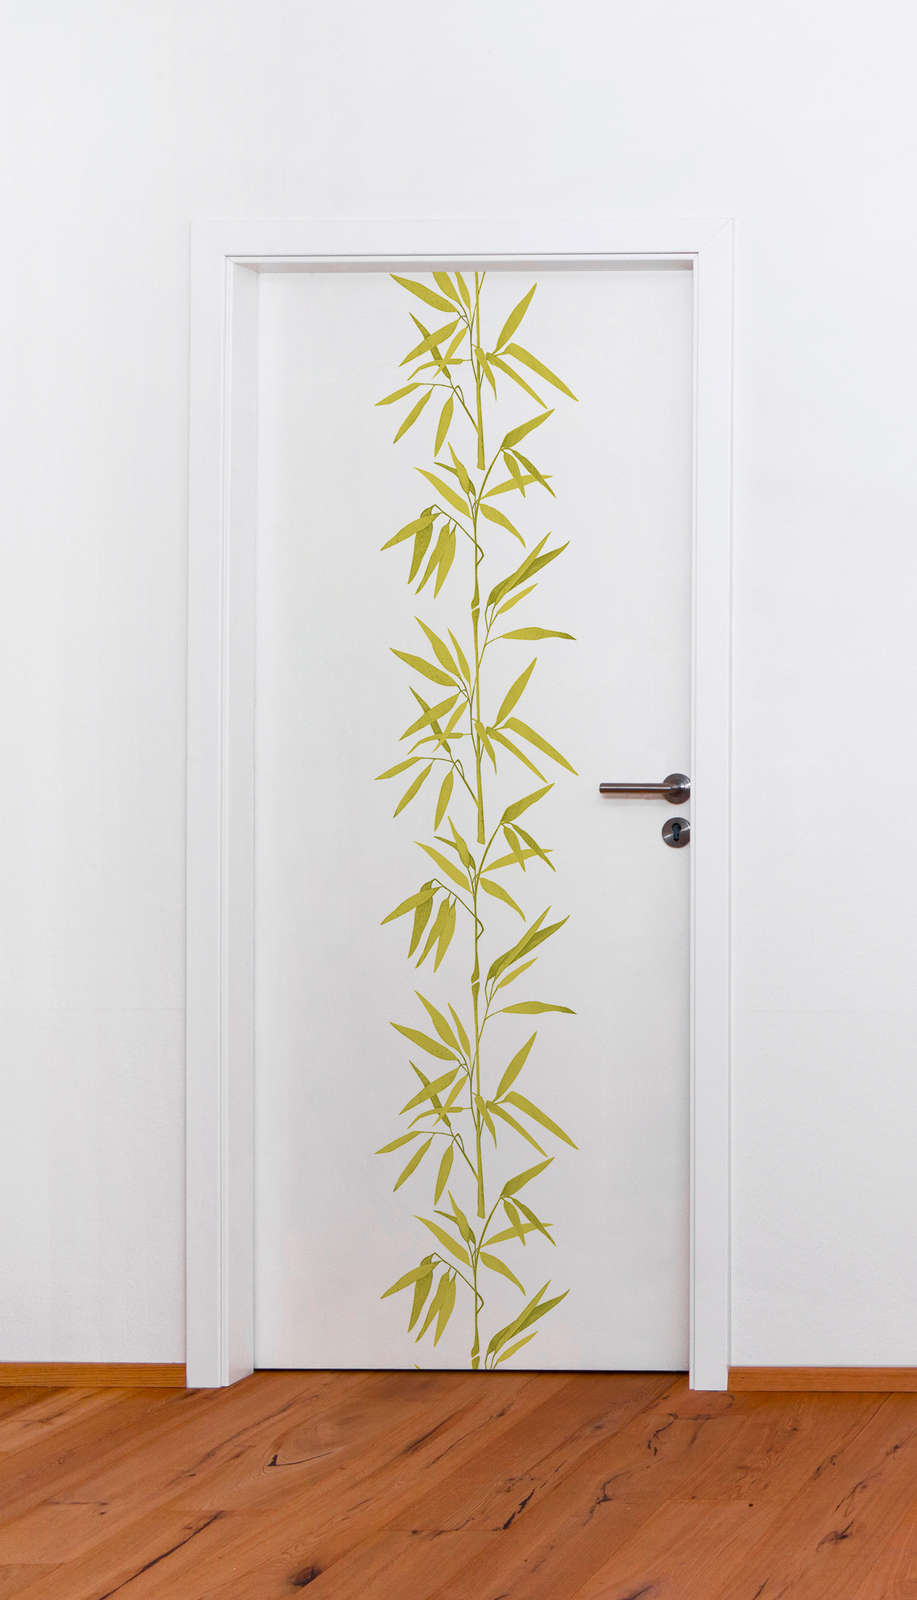             Papel pintado no tejido blanco con motivos de bambú - verde, blanco
        